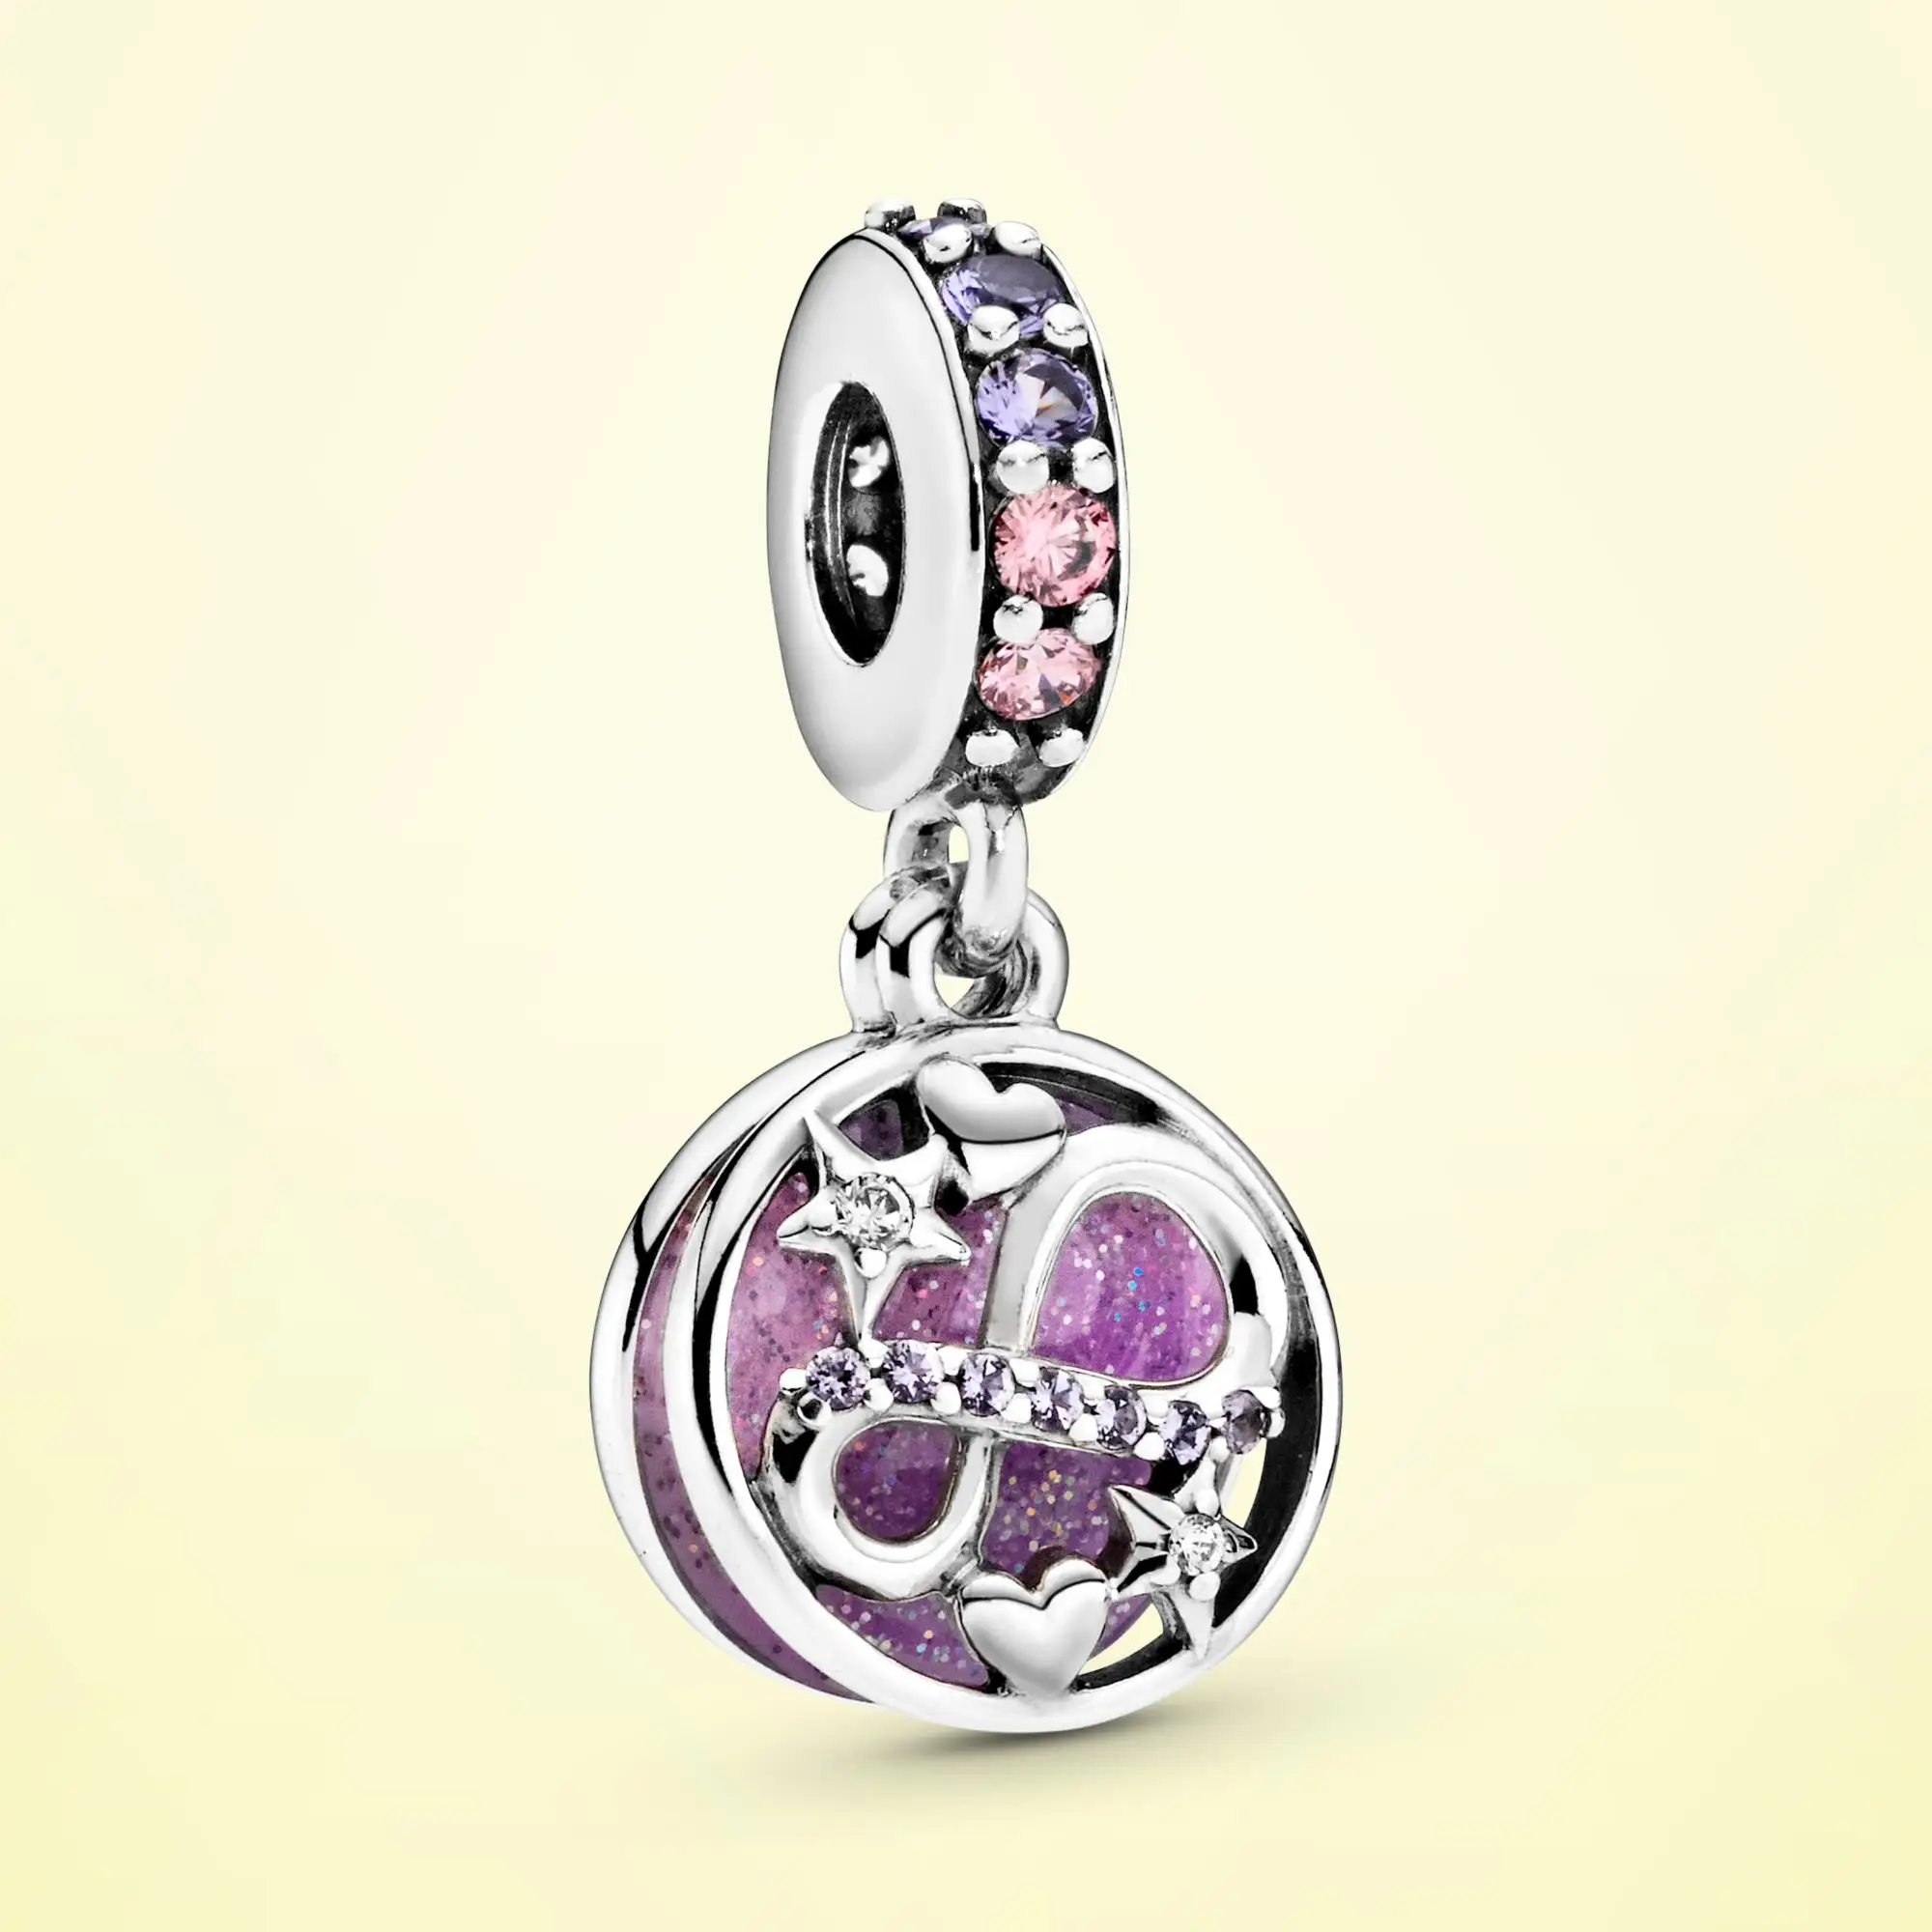 

925 Sterling Silver Glittering Infinity Hearts & Stars Dangle Charm fit Original Pandora Charm Bracelet S925 Silver Jewelry Gift